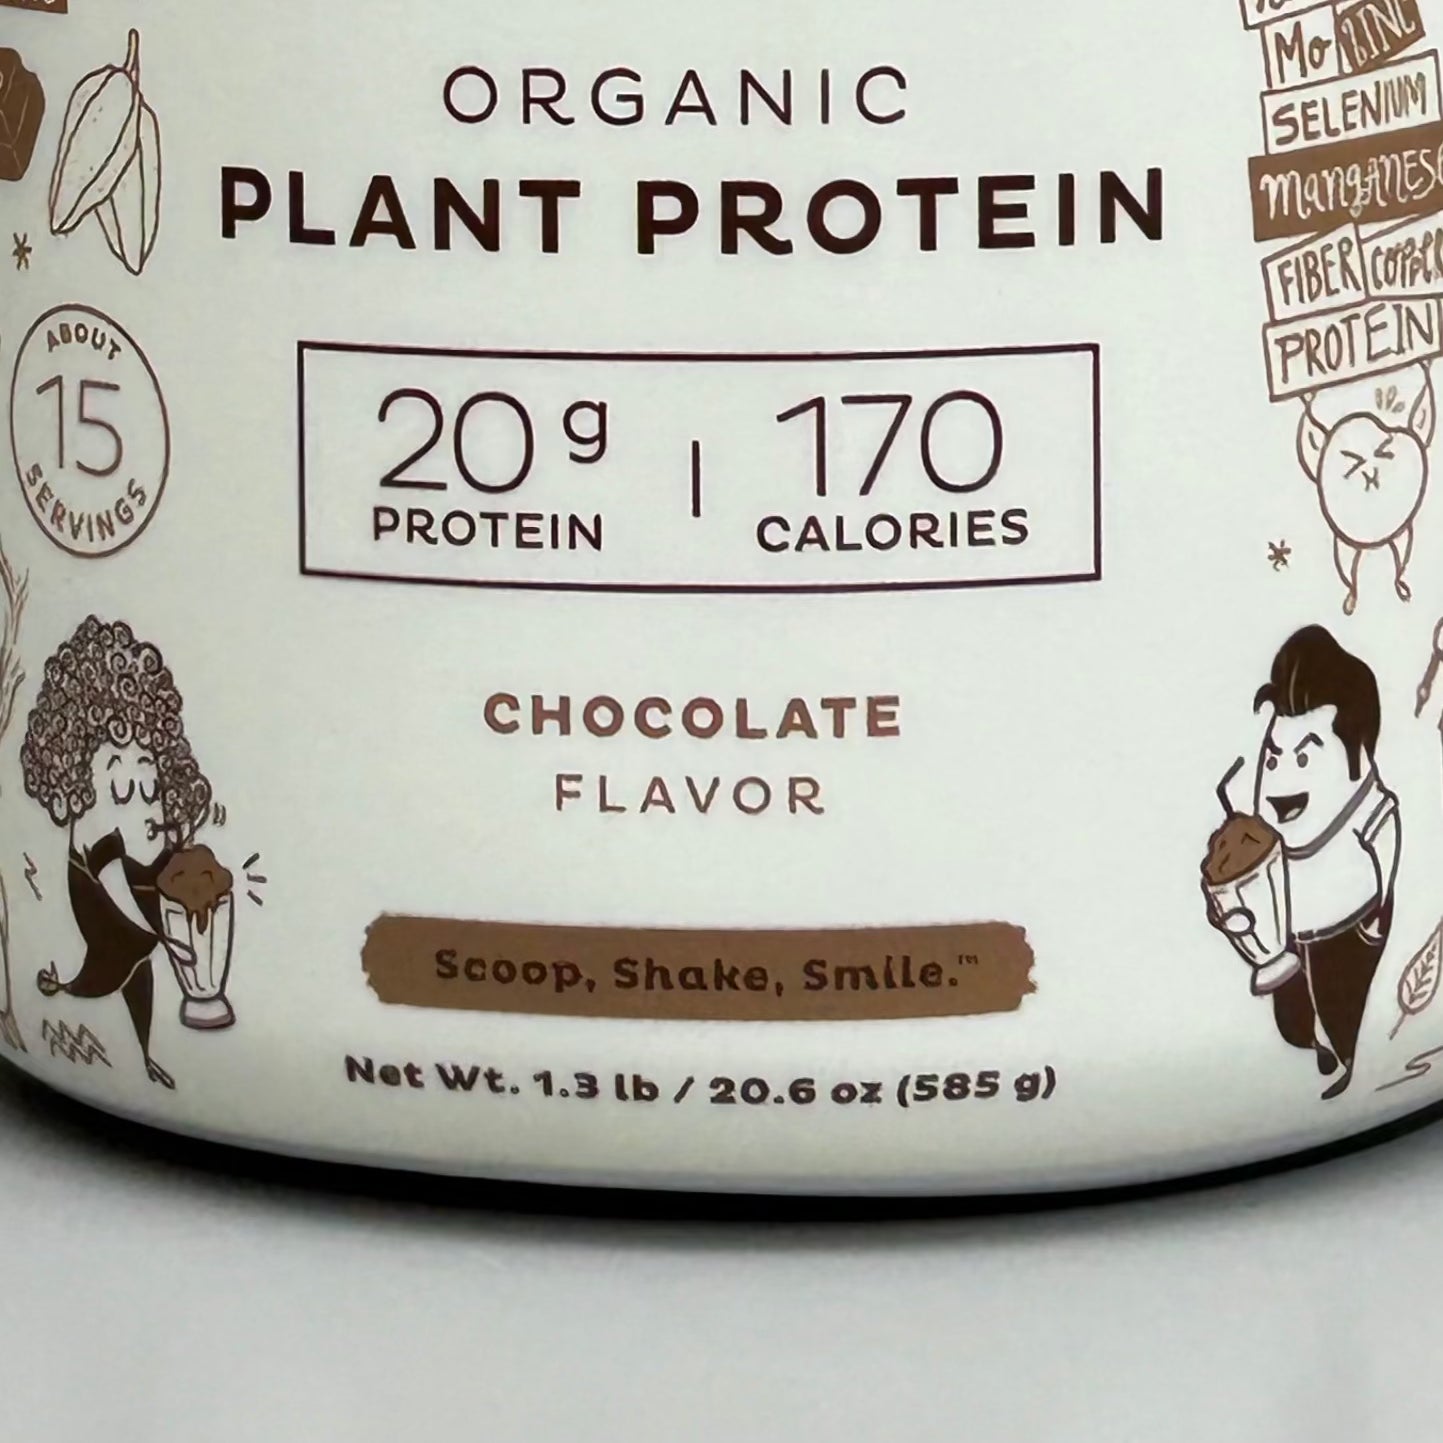 KOS Chocolate Flavored Organic Plant Protein Powder 20.6 oz Exp 9/24 (New)